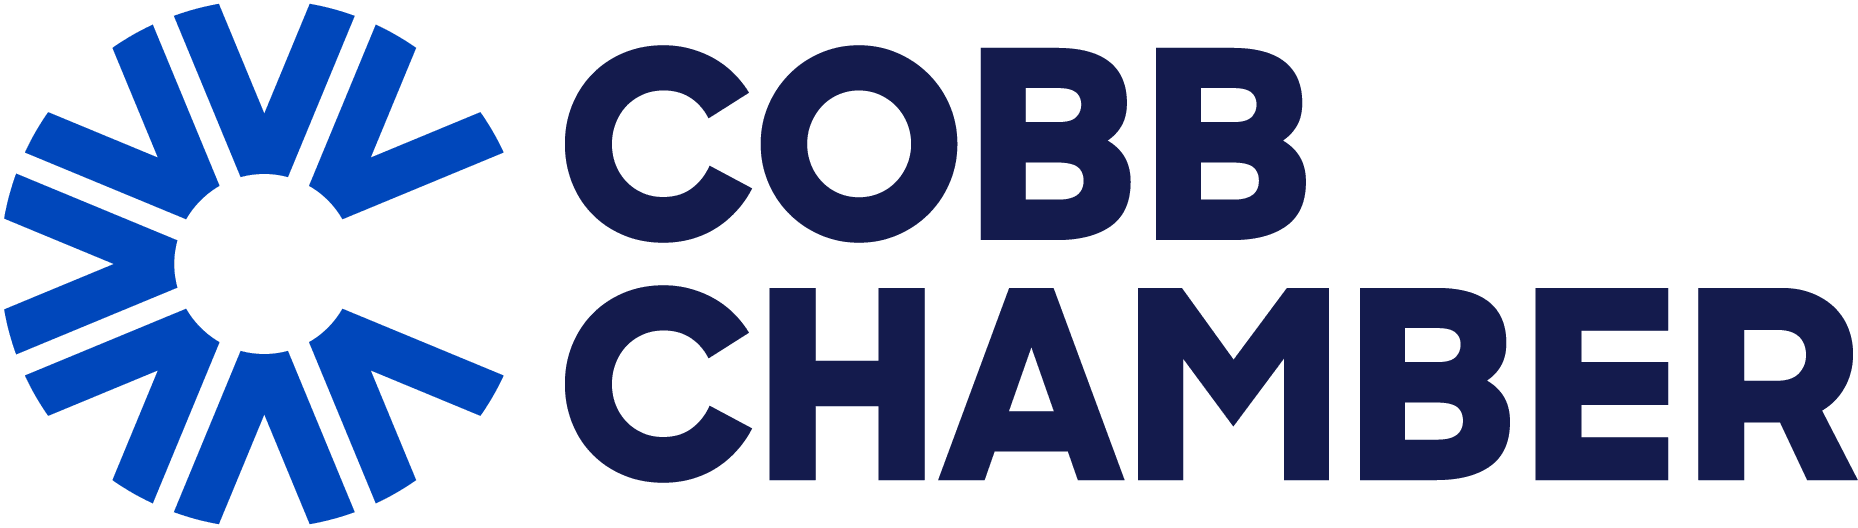 Proud Member of Cobb Chamber of Commerce | Clementine Creative Agency | Marietta, GA